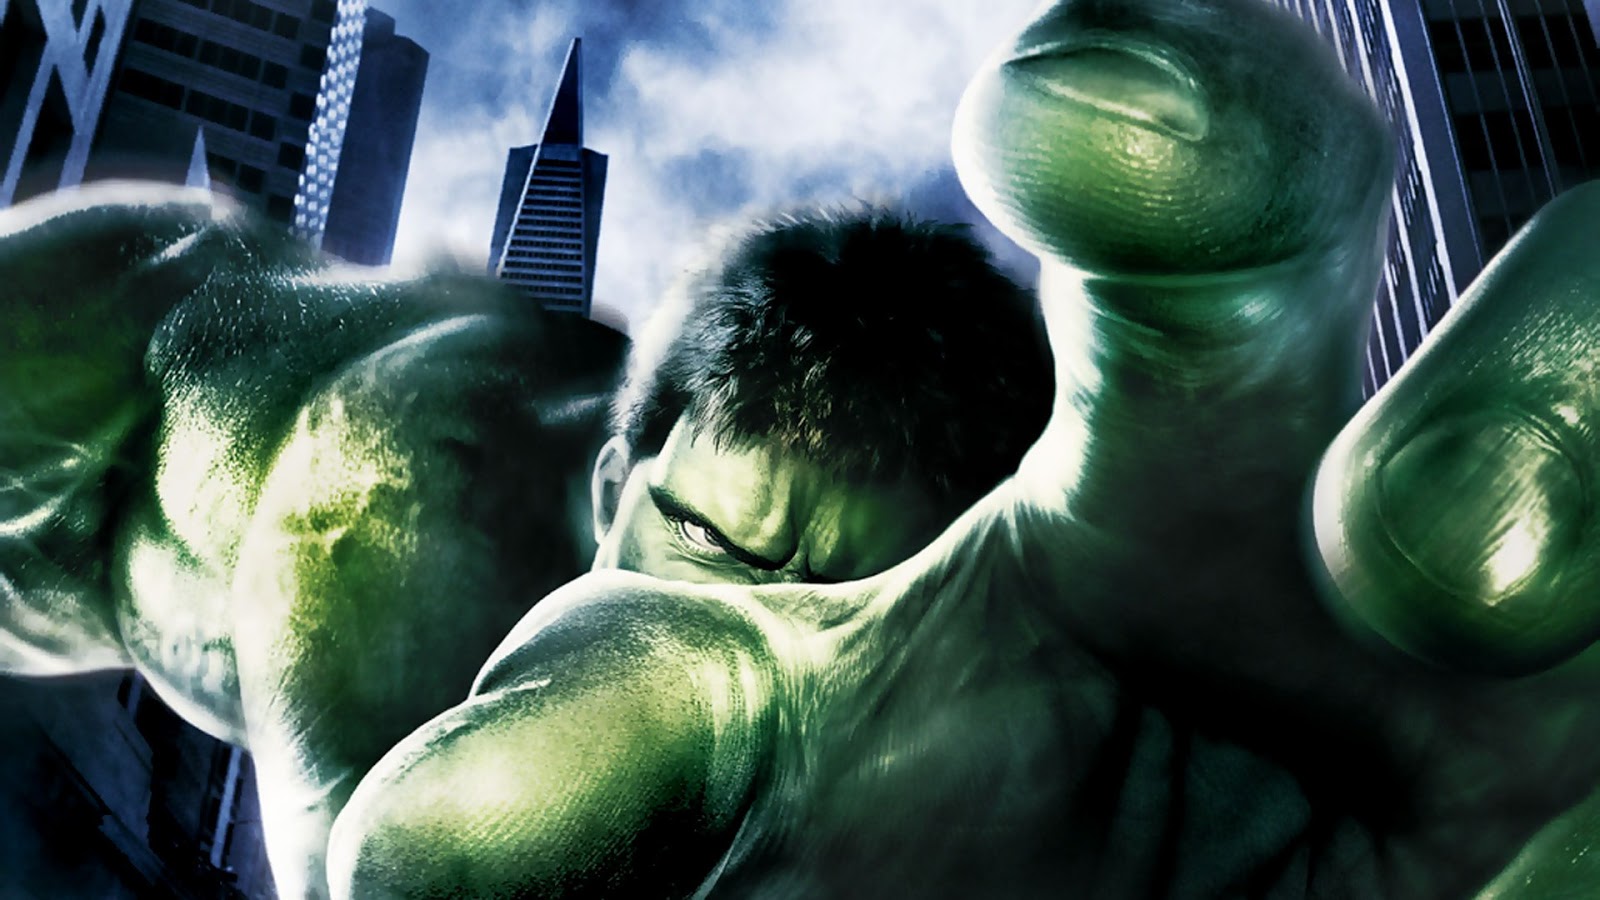 Hulk The Movie Full HD Desktop Wallpaper 1080p